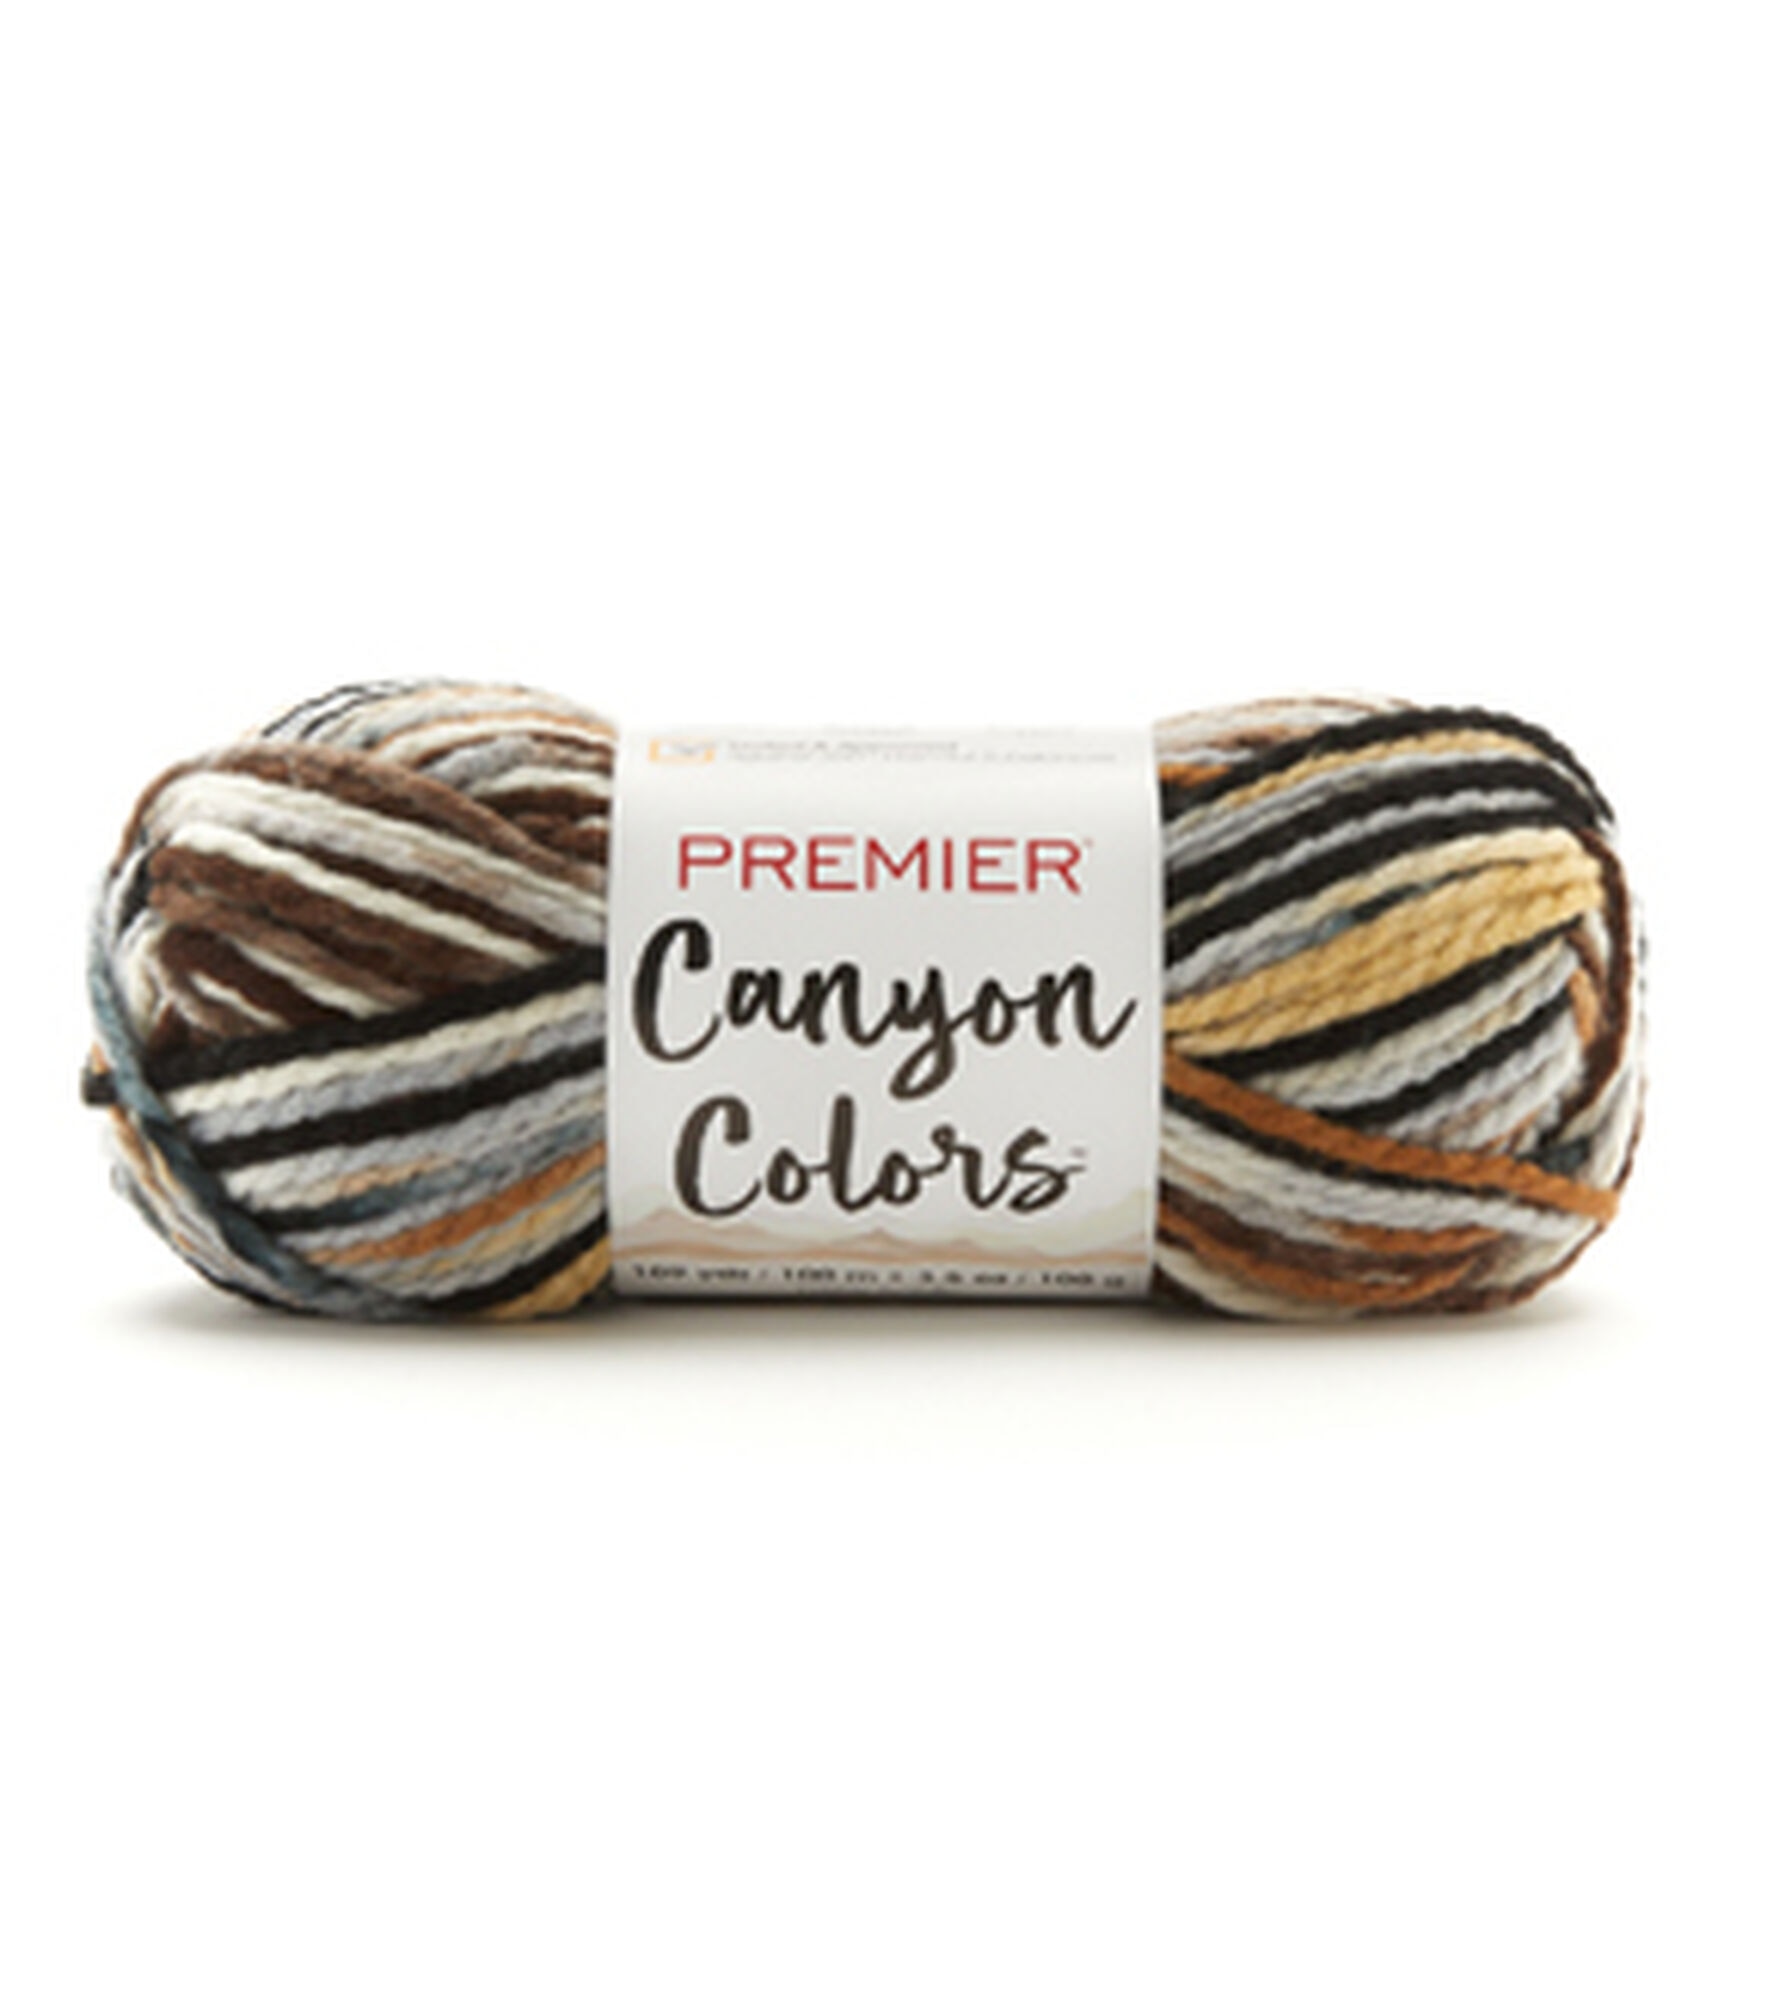 Premier Yarn Canyon Colors Yarn - Antique